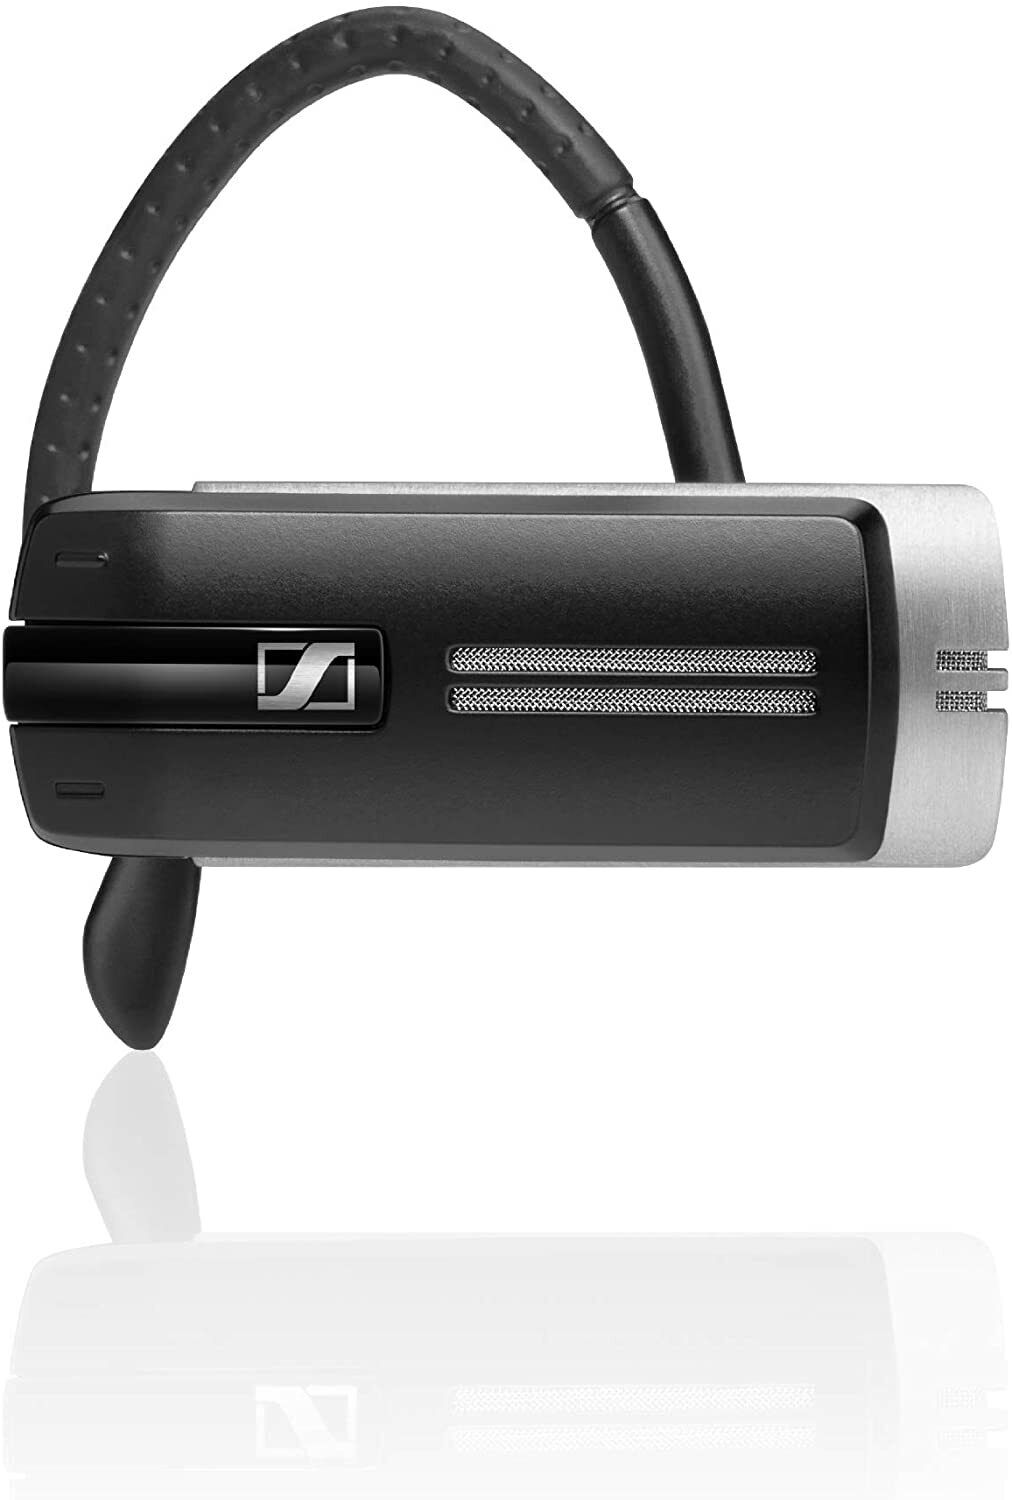 Sennheiser 504576 PRESENCE UC Bluetooth Headset Wireless - HEADSET ONLY